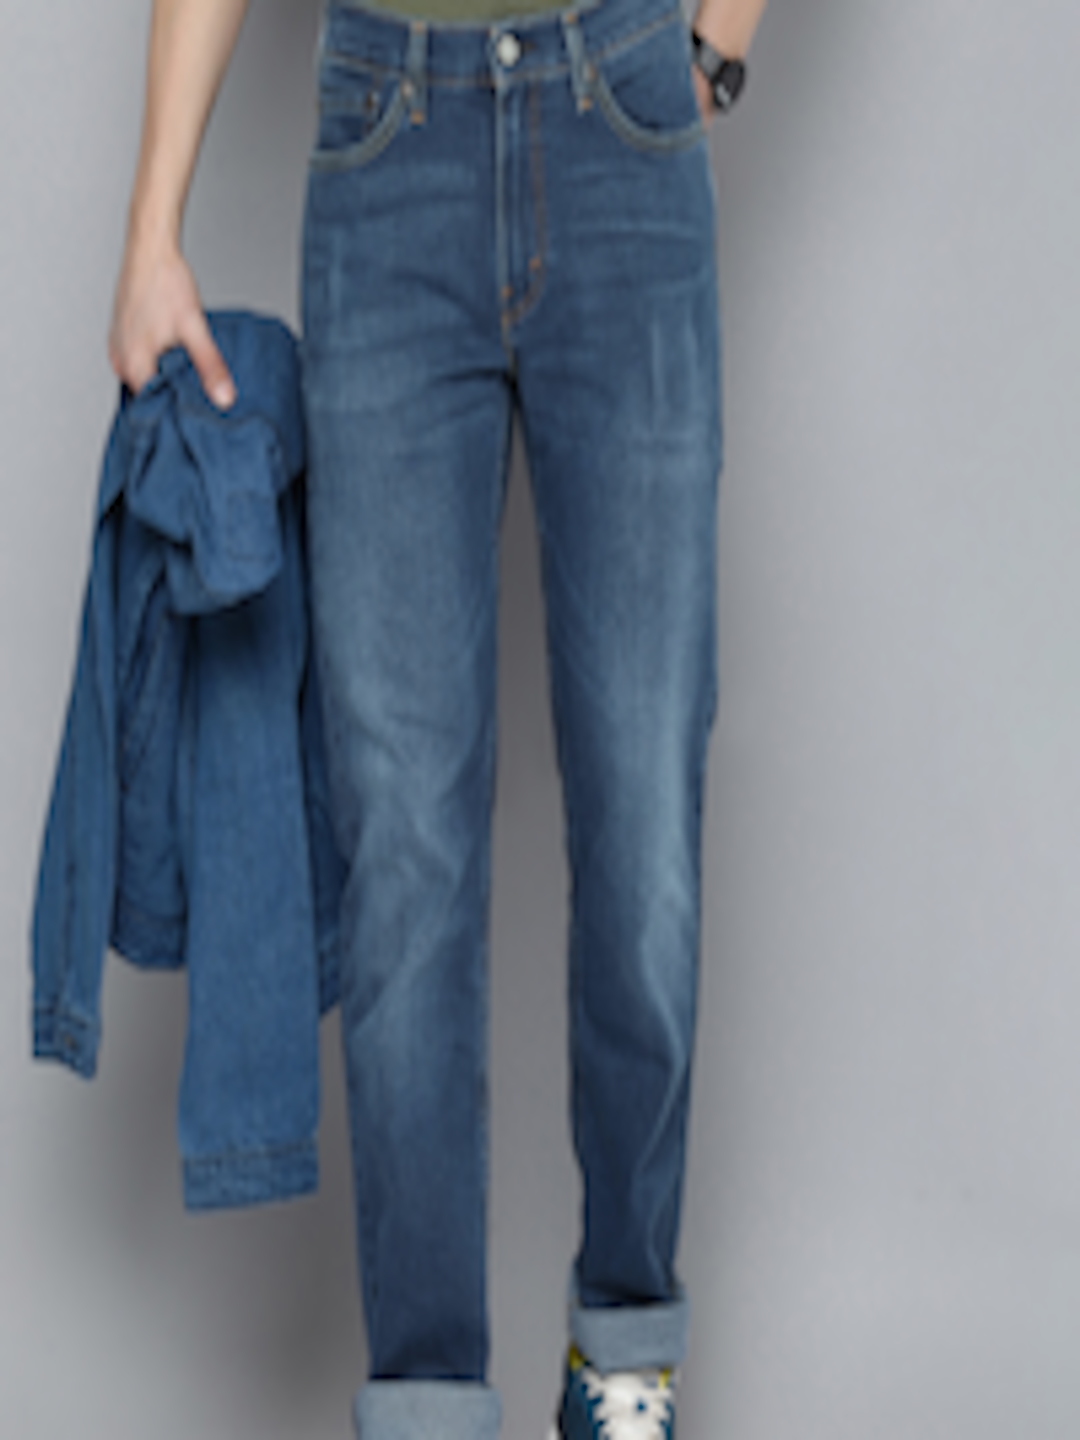 Buy Levis Men 511 Slim Fit Light Fade Mid Rise Stretchable Jeans ...